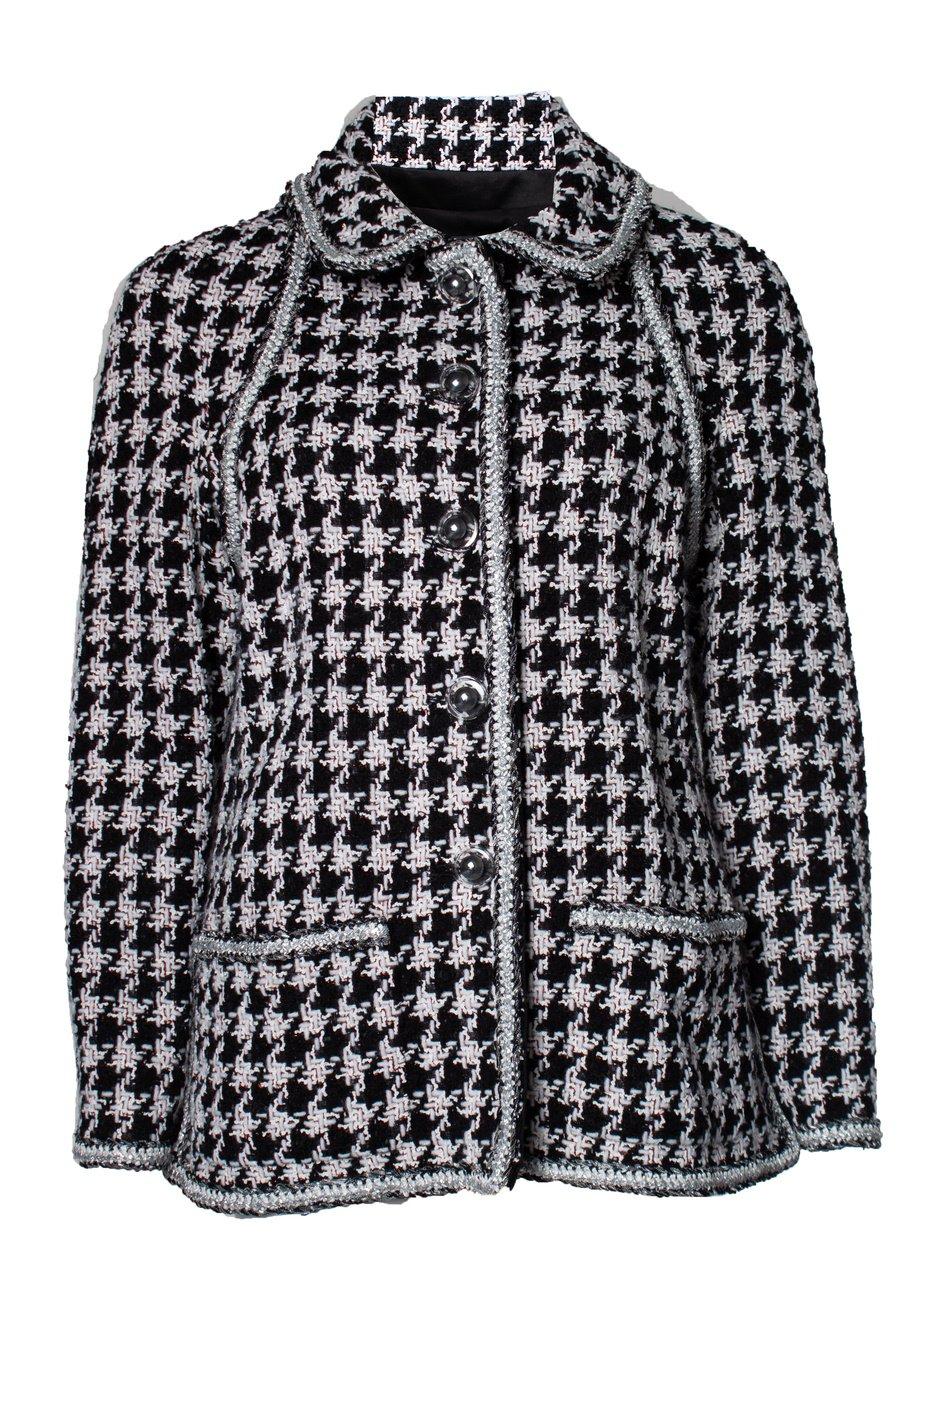 Women's or Men's Chanel New Black Houndstooth Tweed Jacket For Sale